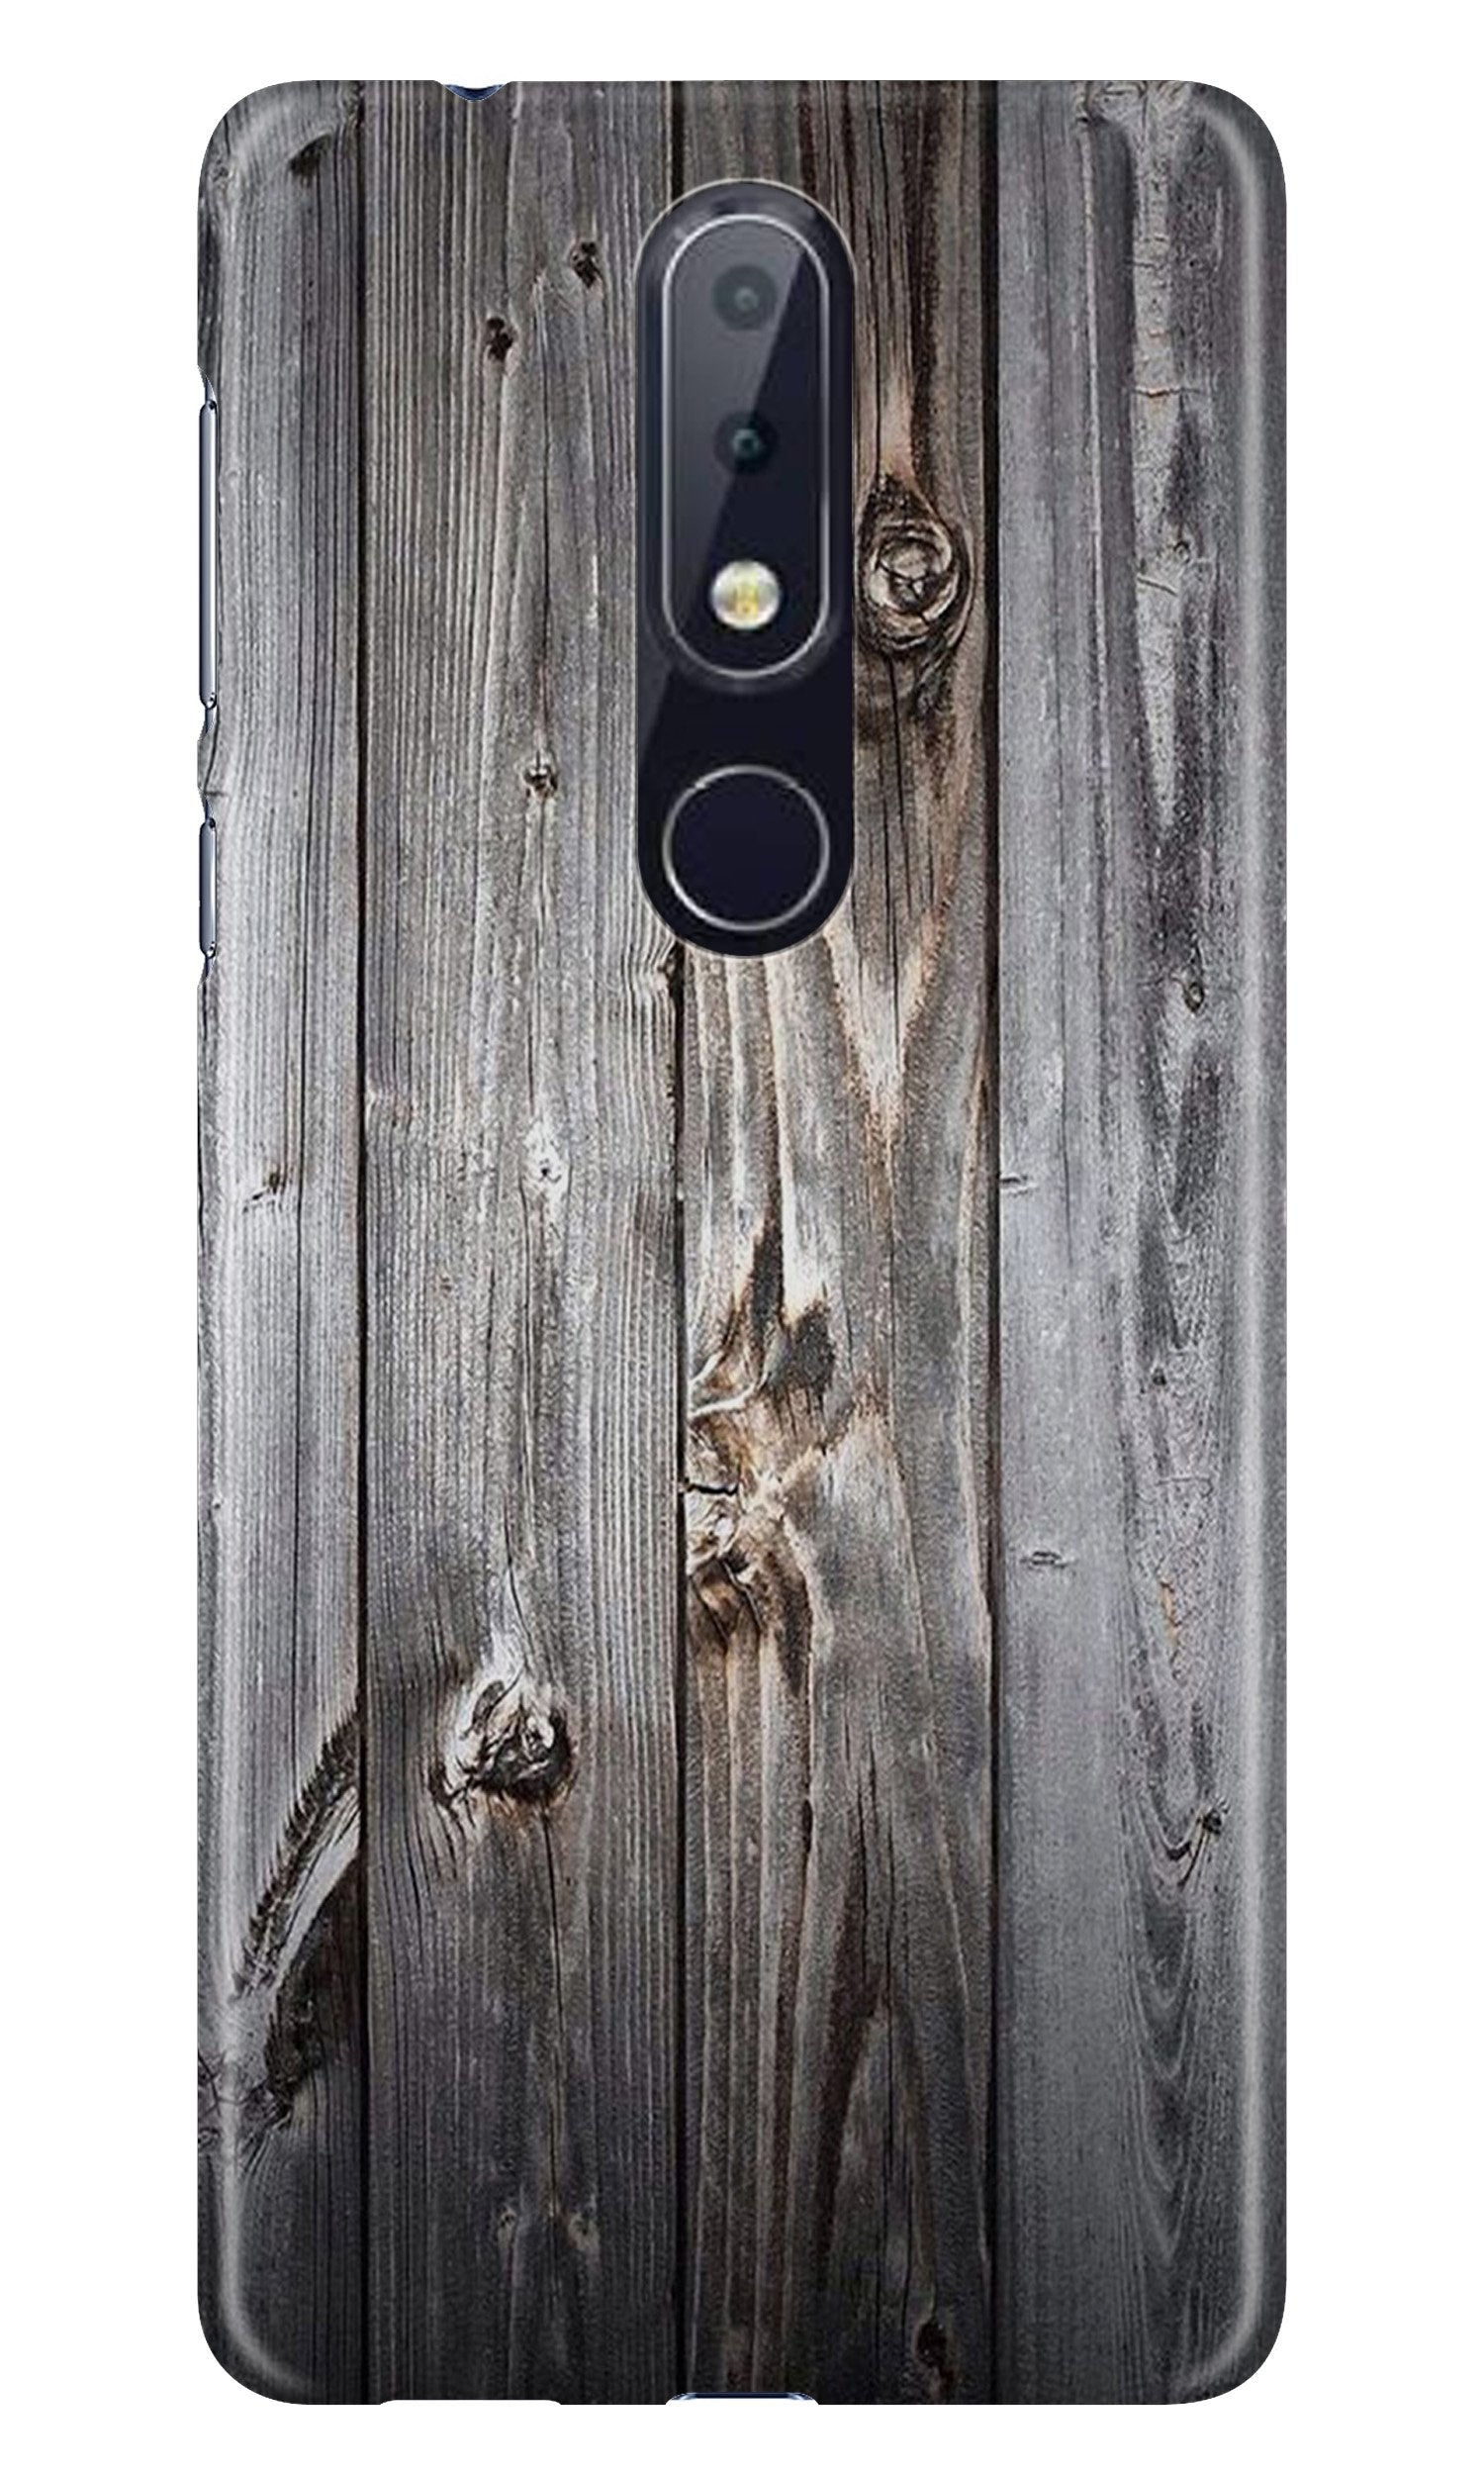 Wooden Look Case for Nokia 6.1 Plus(Design - 114)